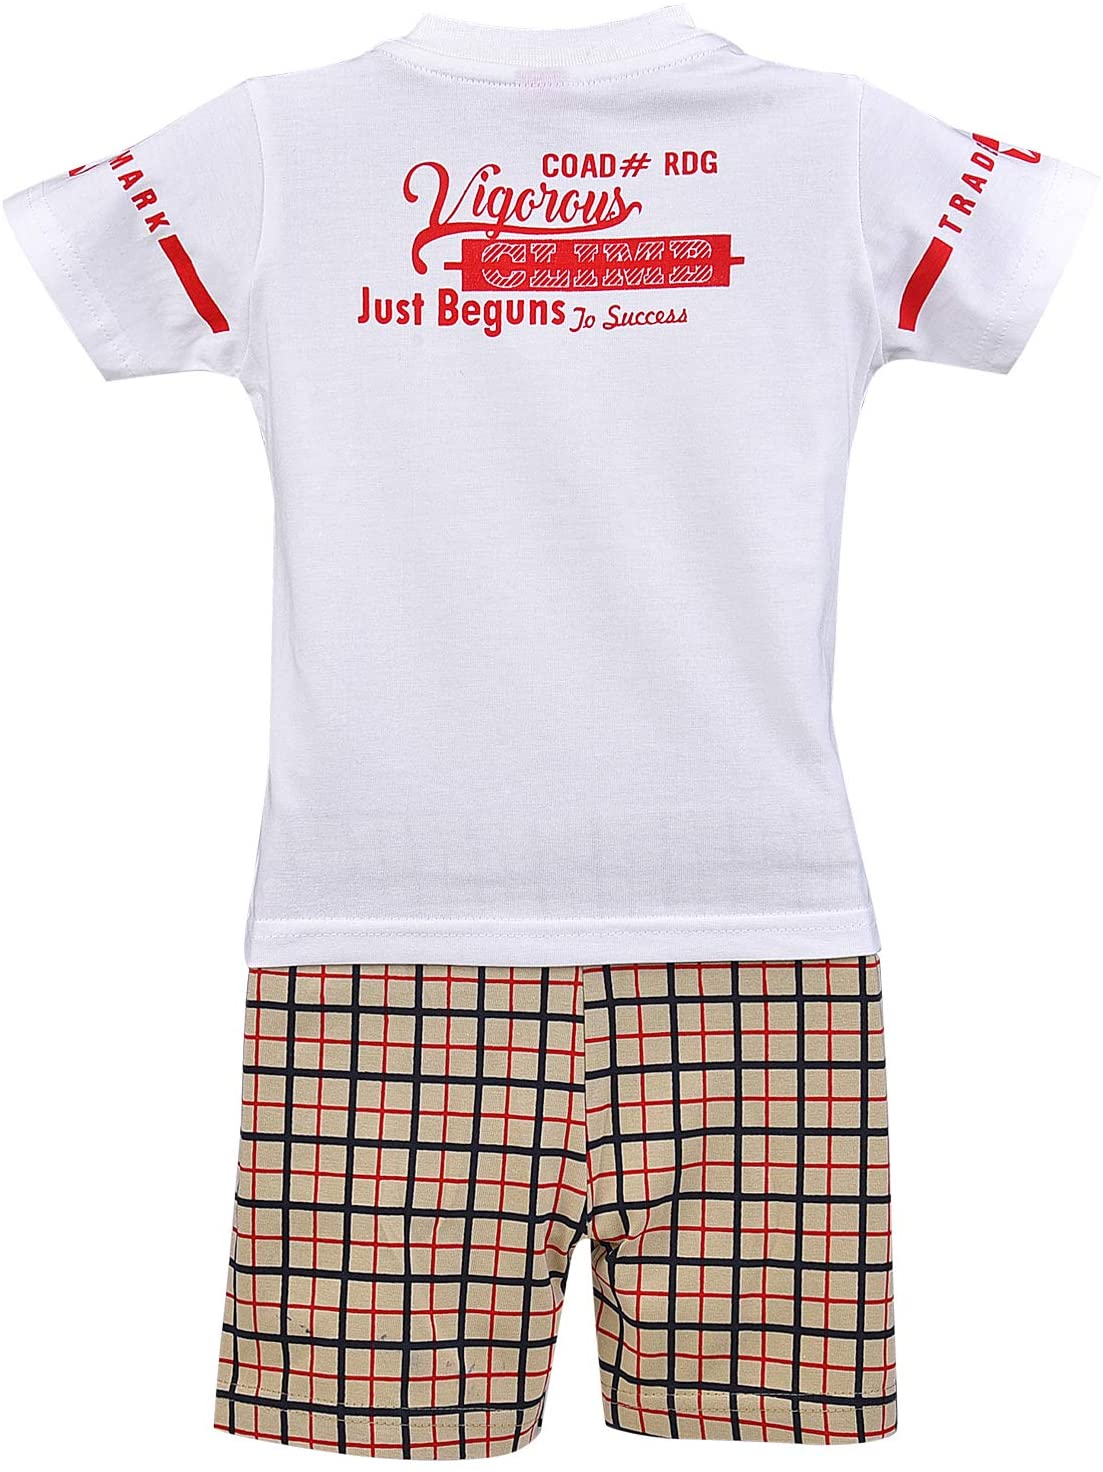 Wish Karo Unisex Clothing Sets for Boys & Baby Girls-(bt17blk)